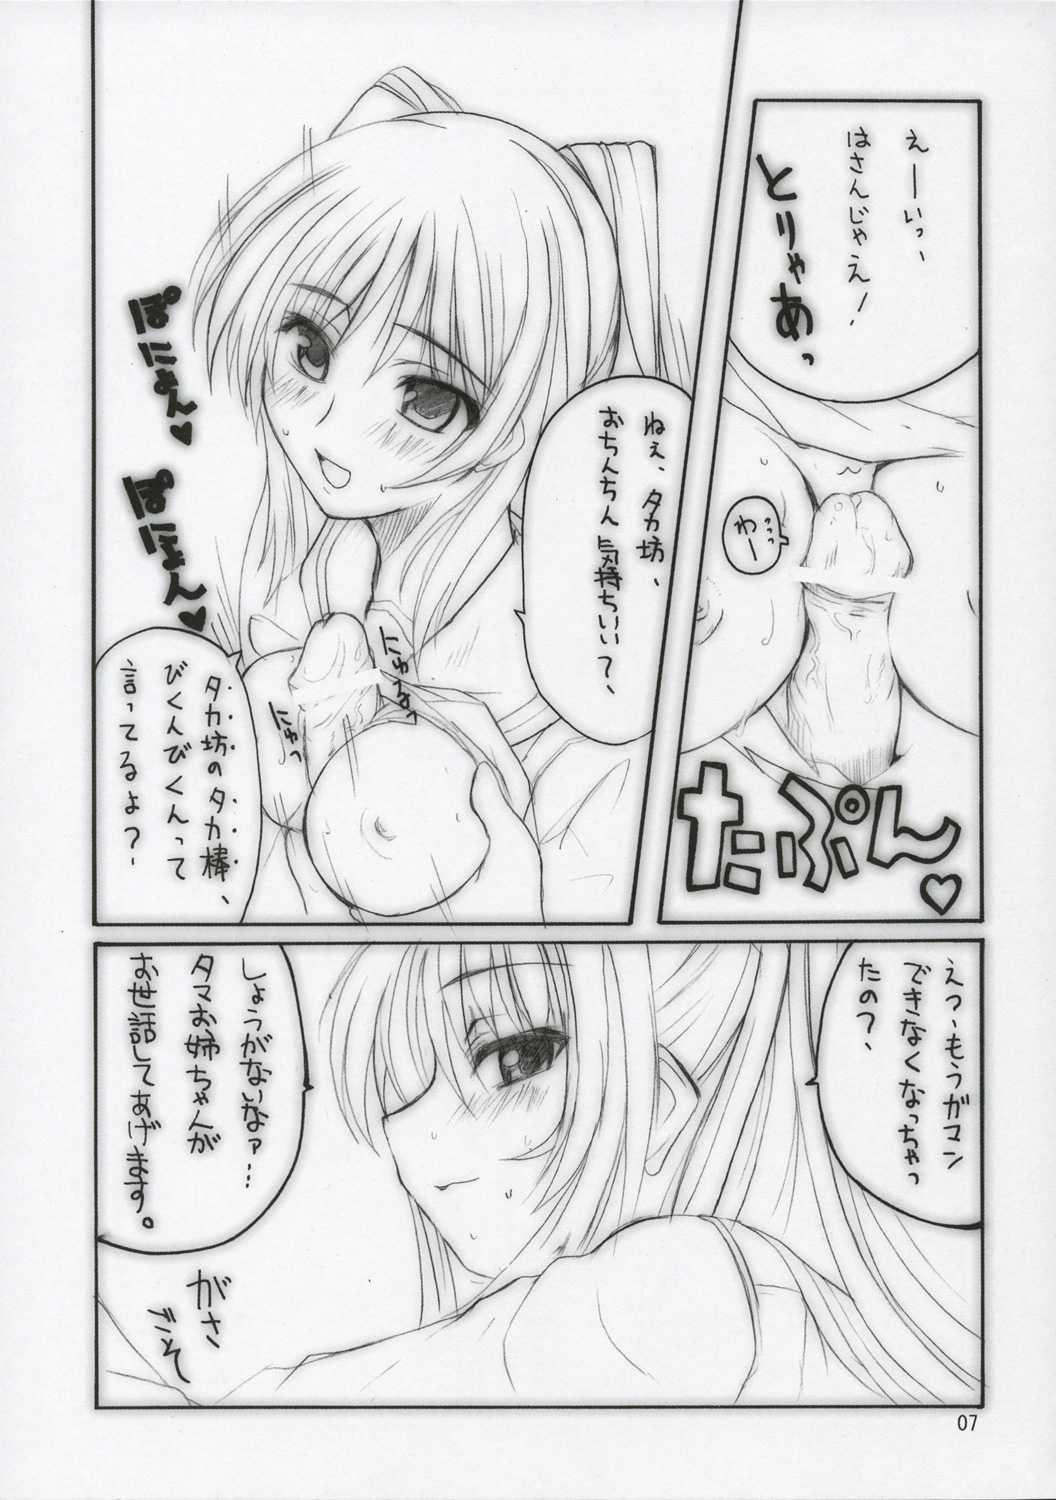 (CR37) [Blue Mage (Aoi Manabu)] HEART IN BREAST (ToHeart2) (コミックレヴォリューション37) [Blue Mage (あおいまなぶ)] HEART IN BREAST (ToHeart2)